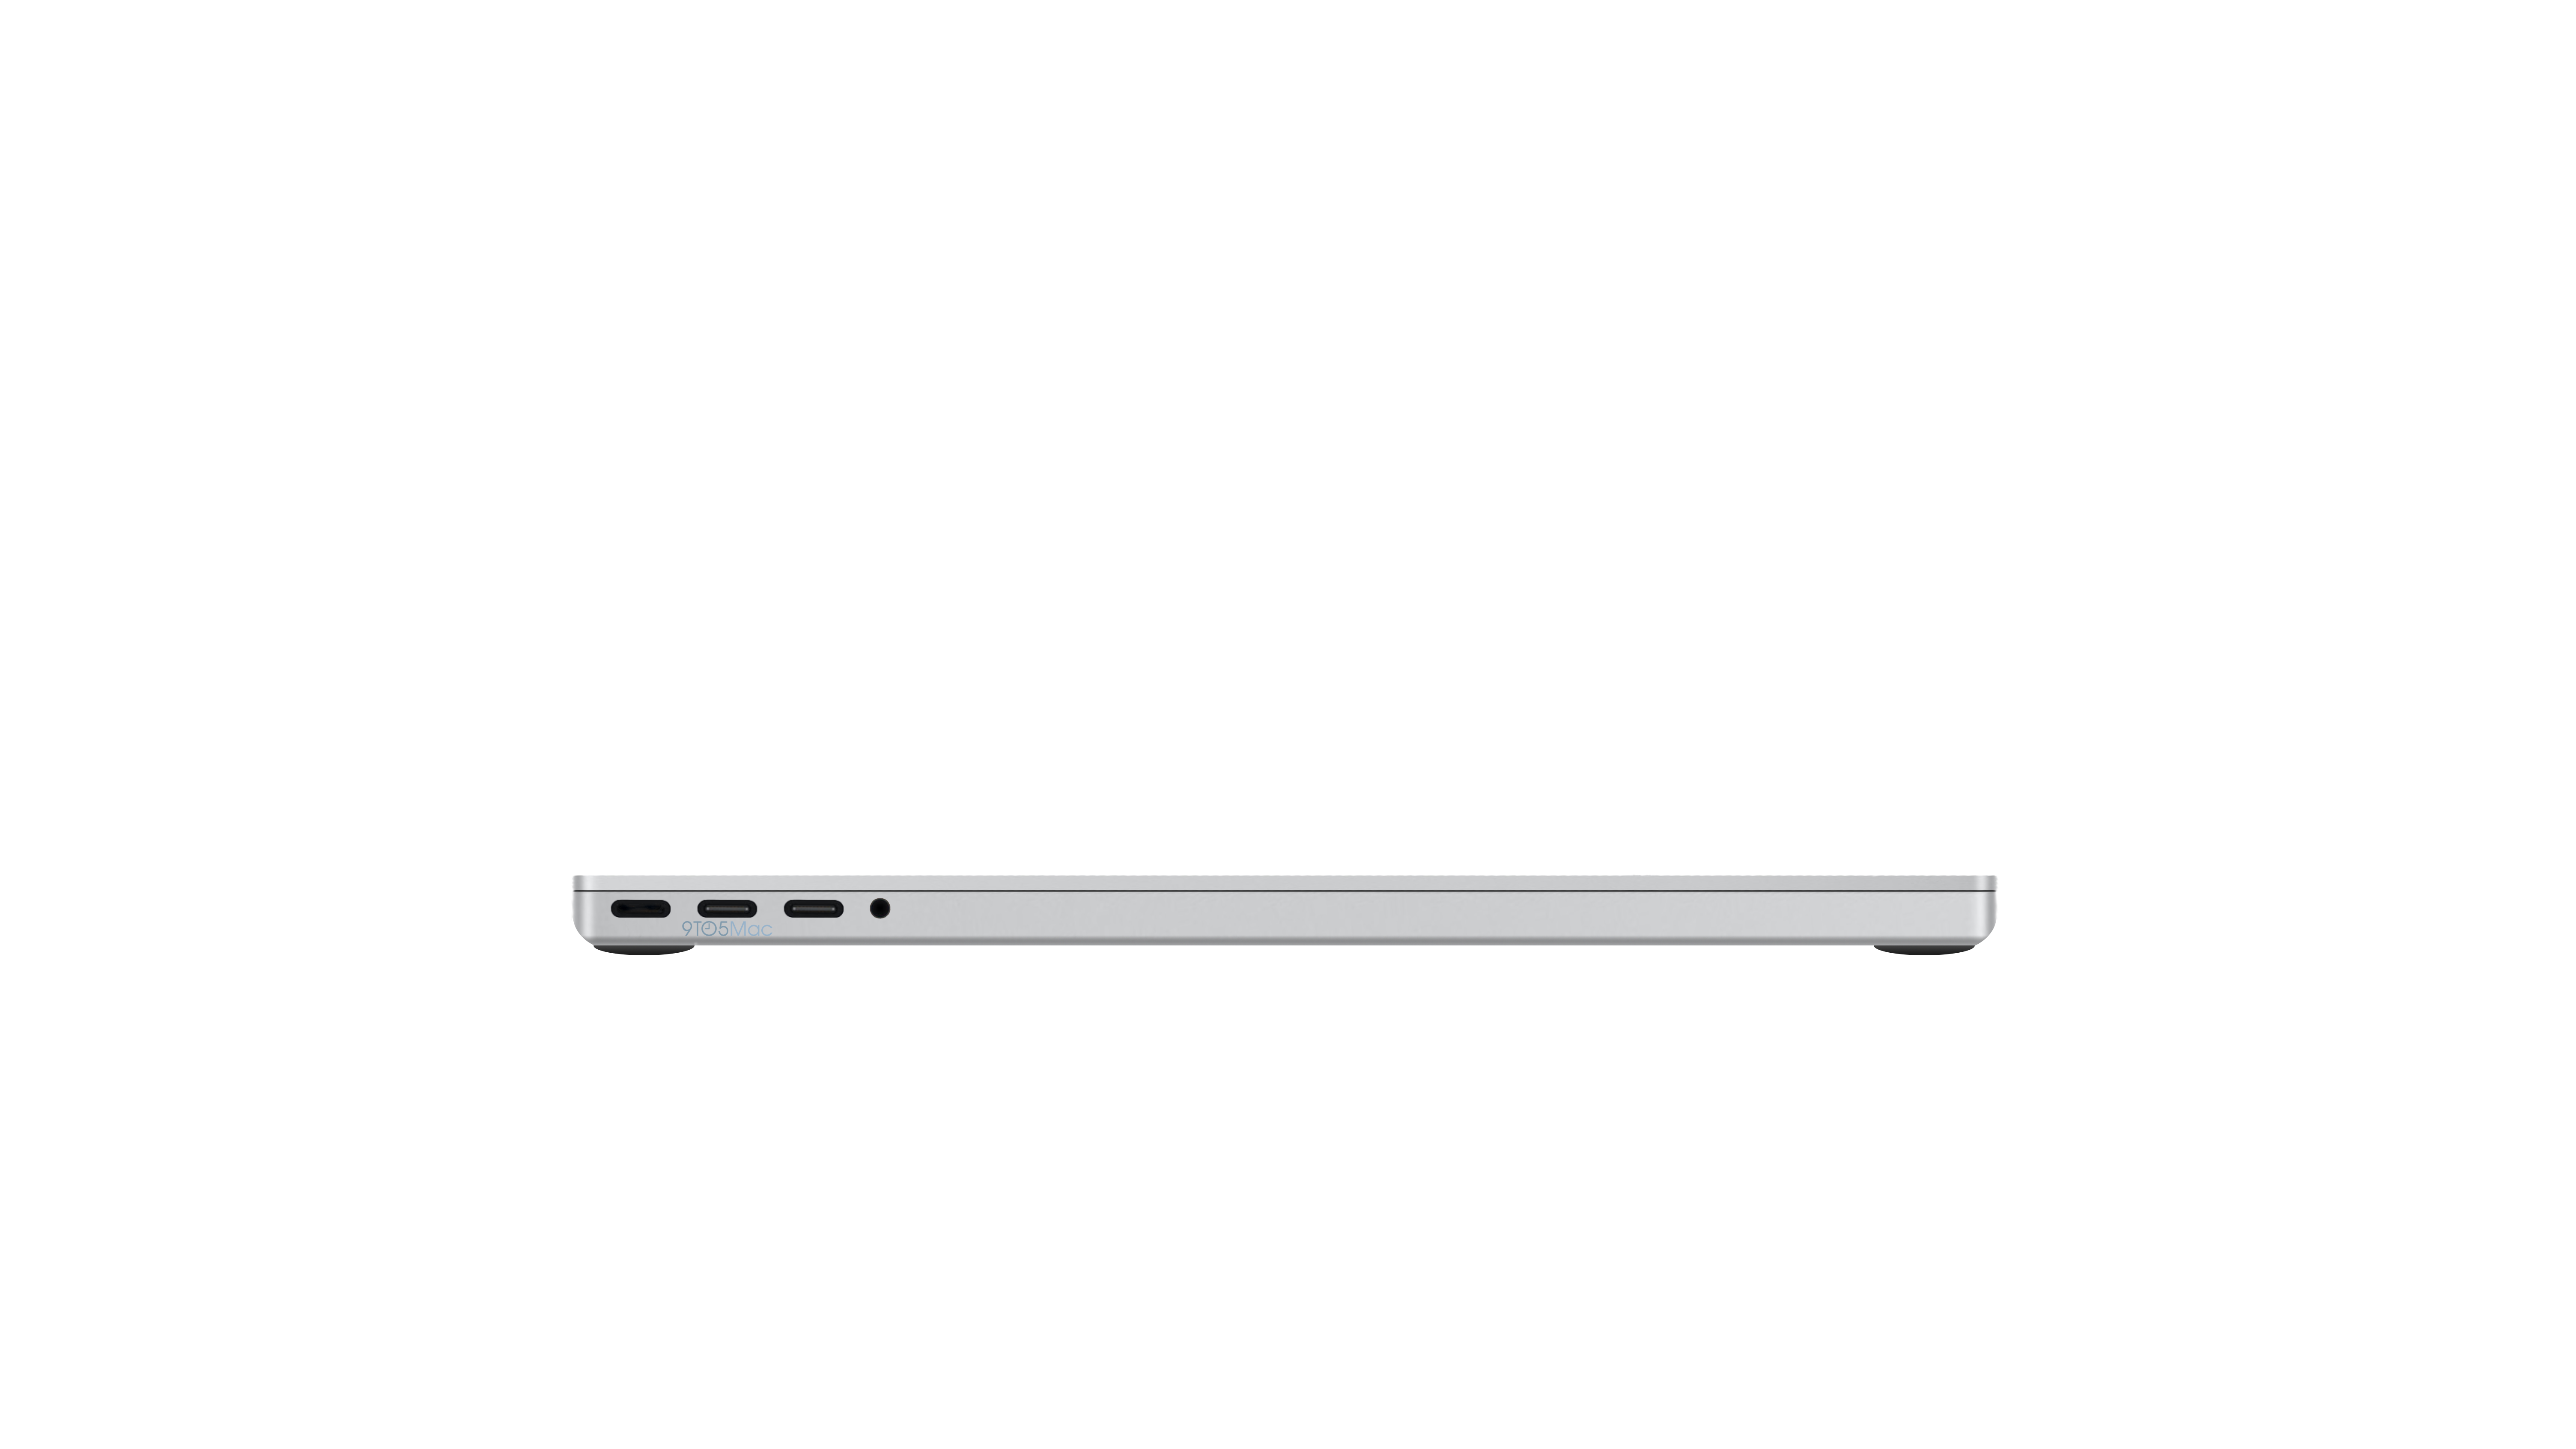 Appleosophy|Ransom Leak Reveals Details on 2021 MacBook Pro